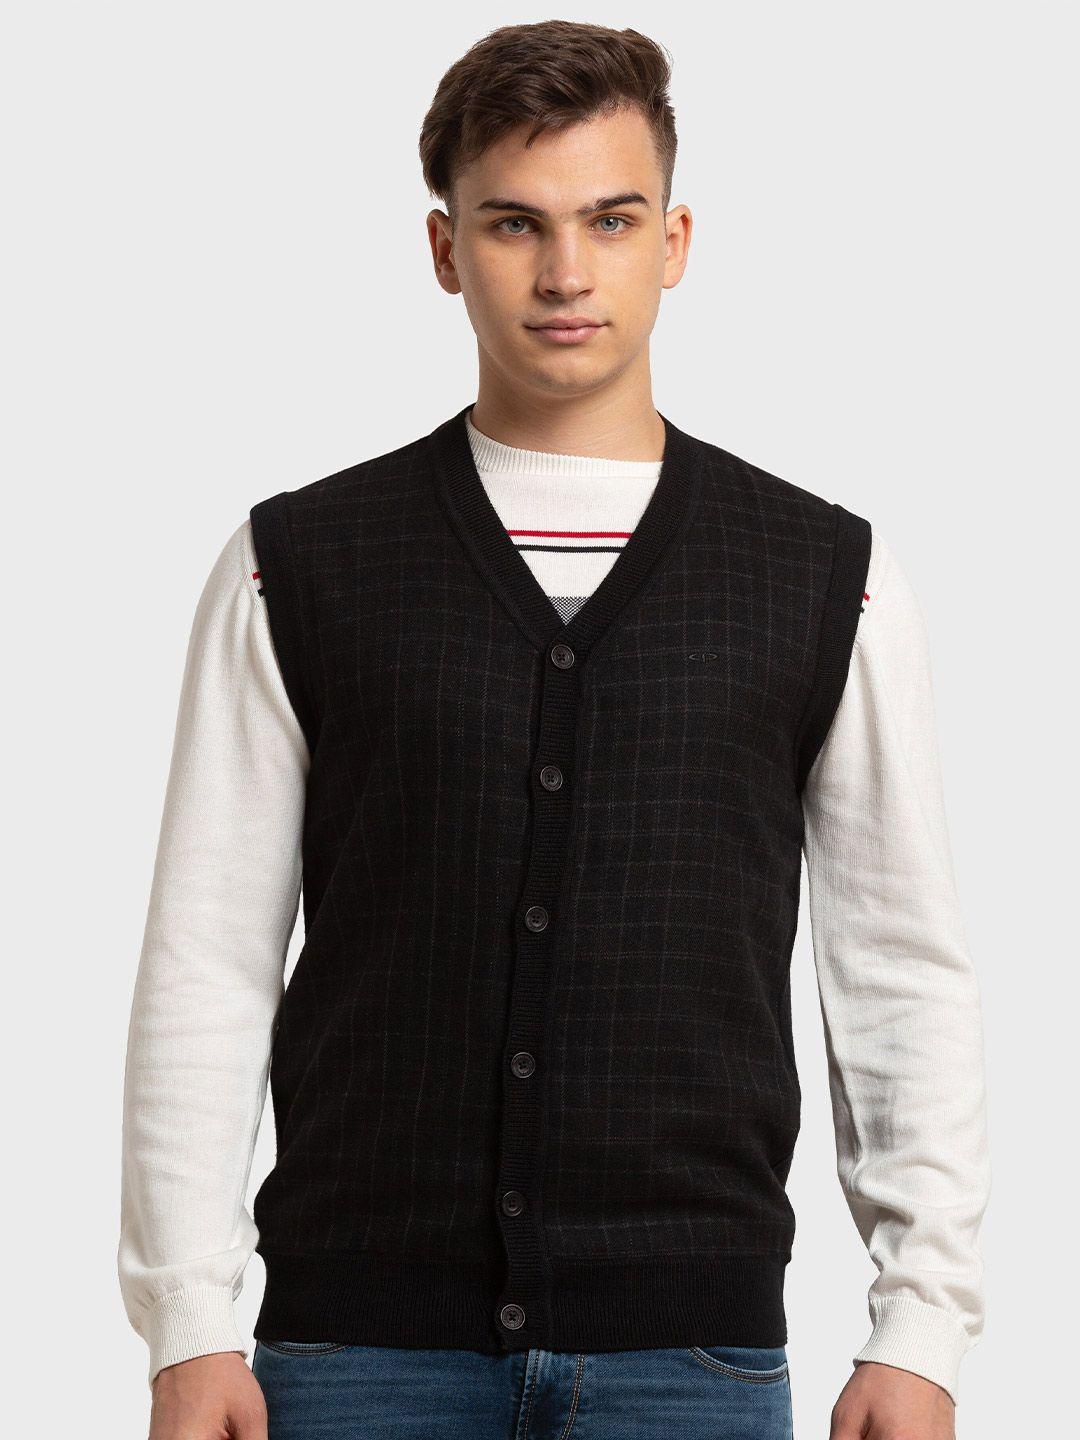 colorplus-checked-sleeveless-v-neck-cardigan-sweater